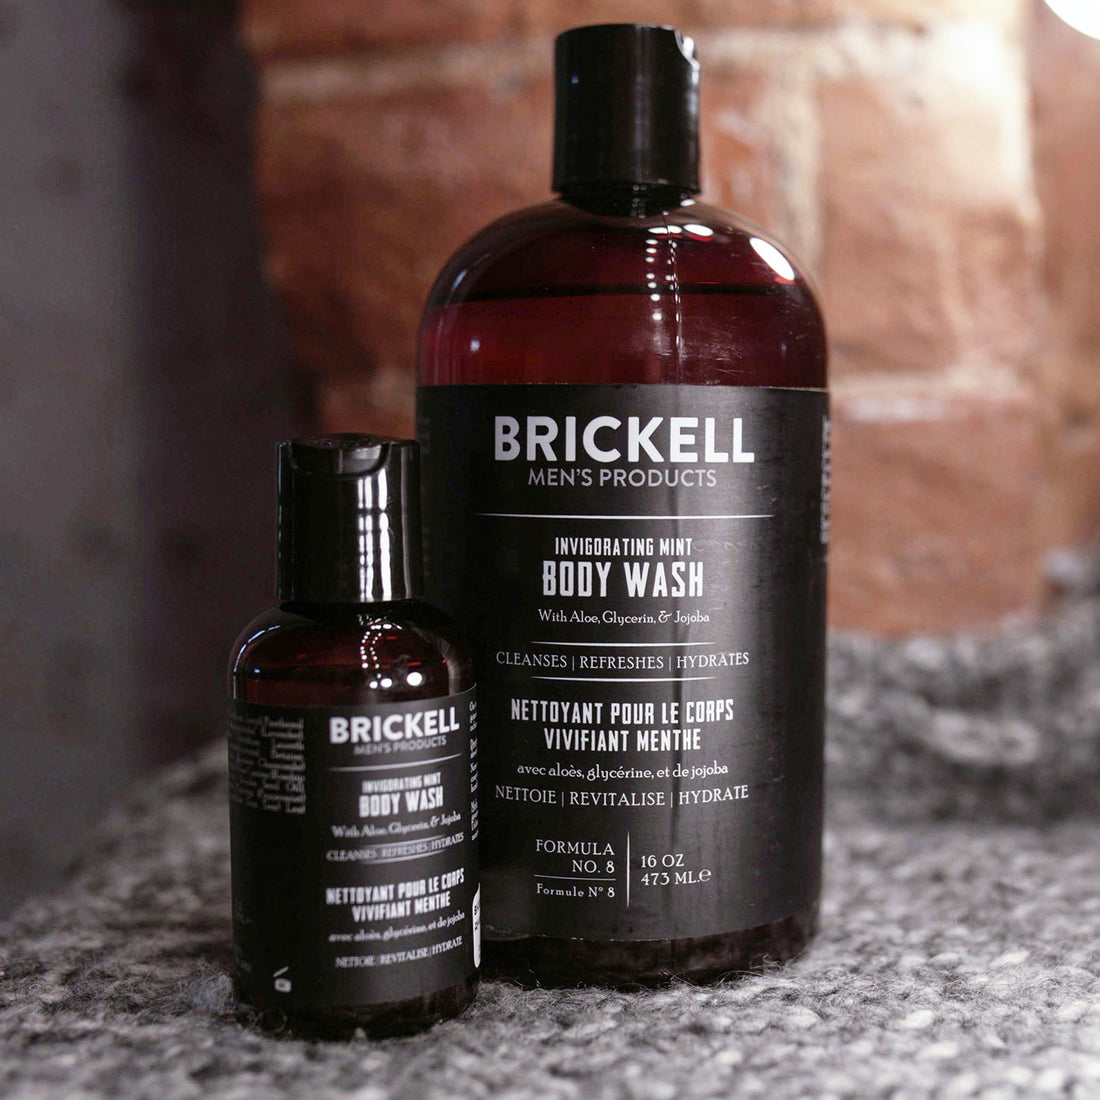 The Panic Room presents Brickell Invigorating Mint Body Wash